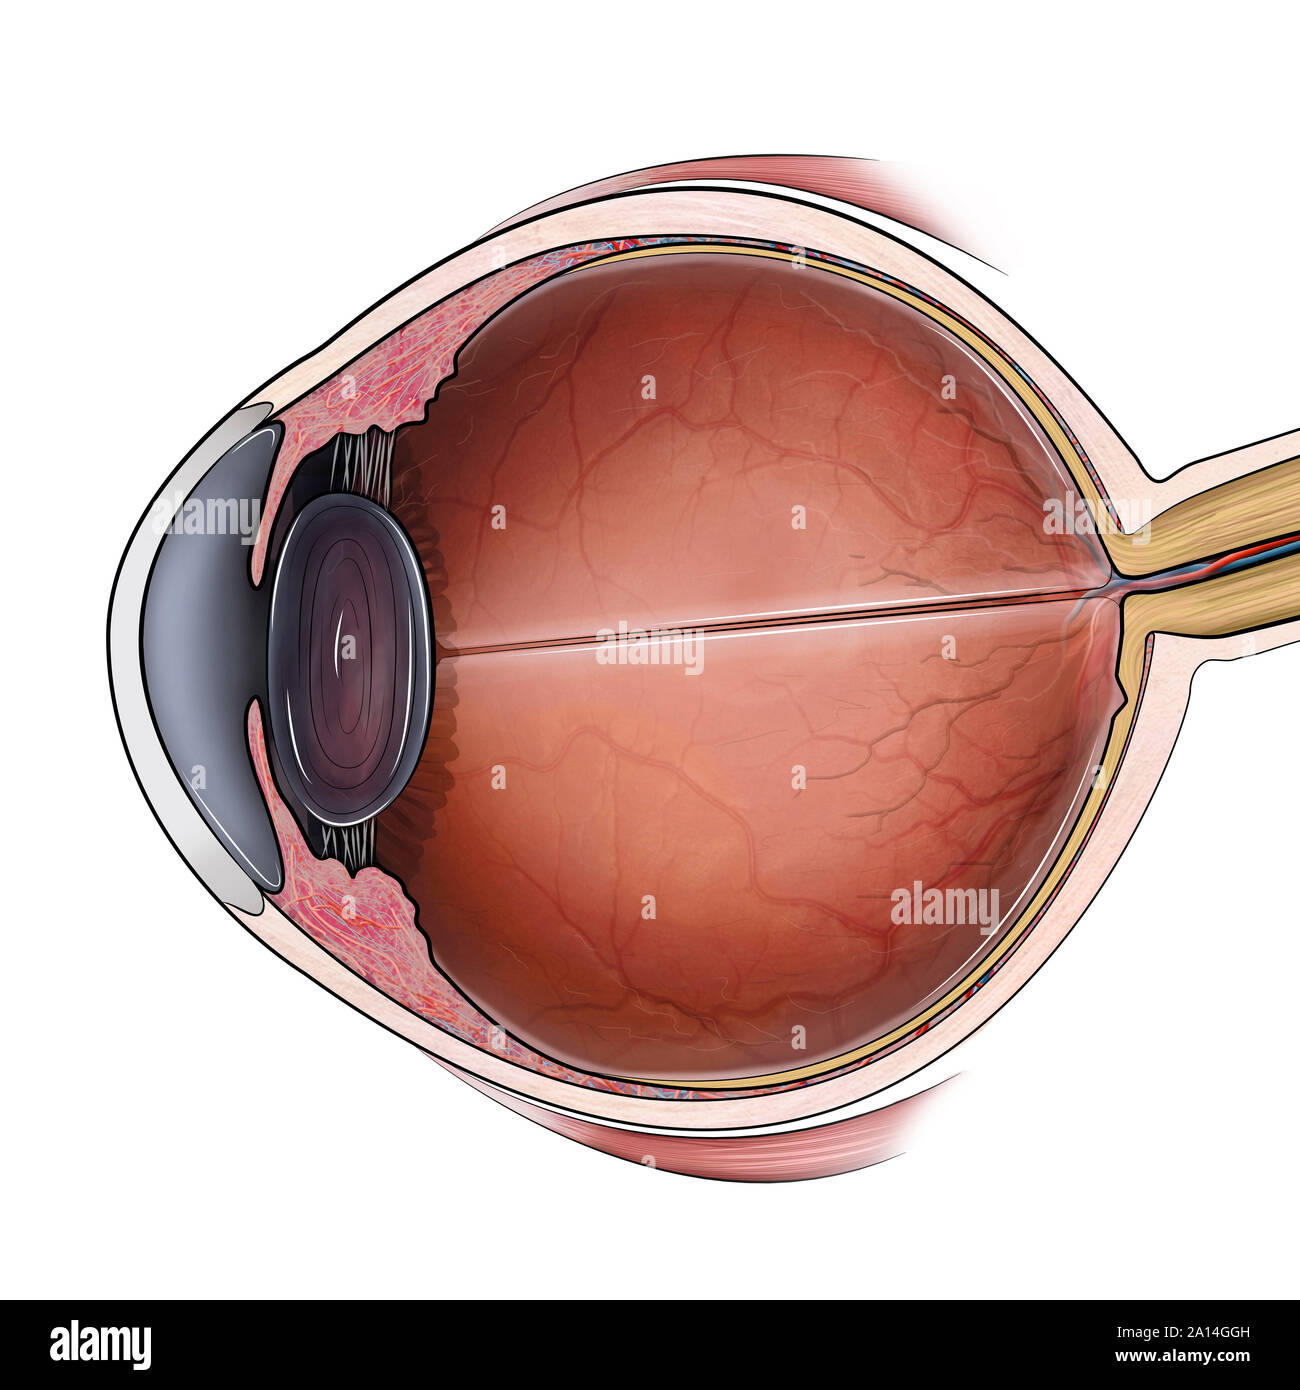 Transverse section of eye anatomy. Stock Photo